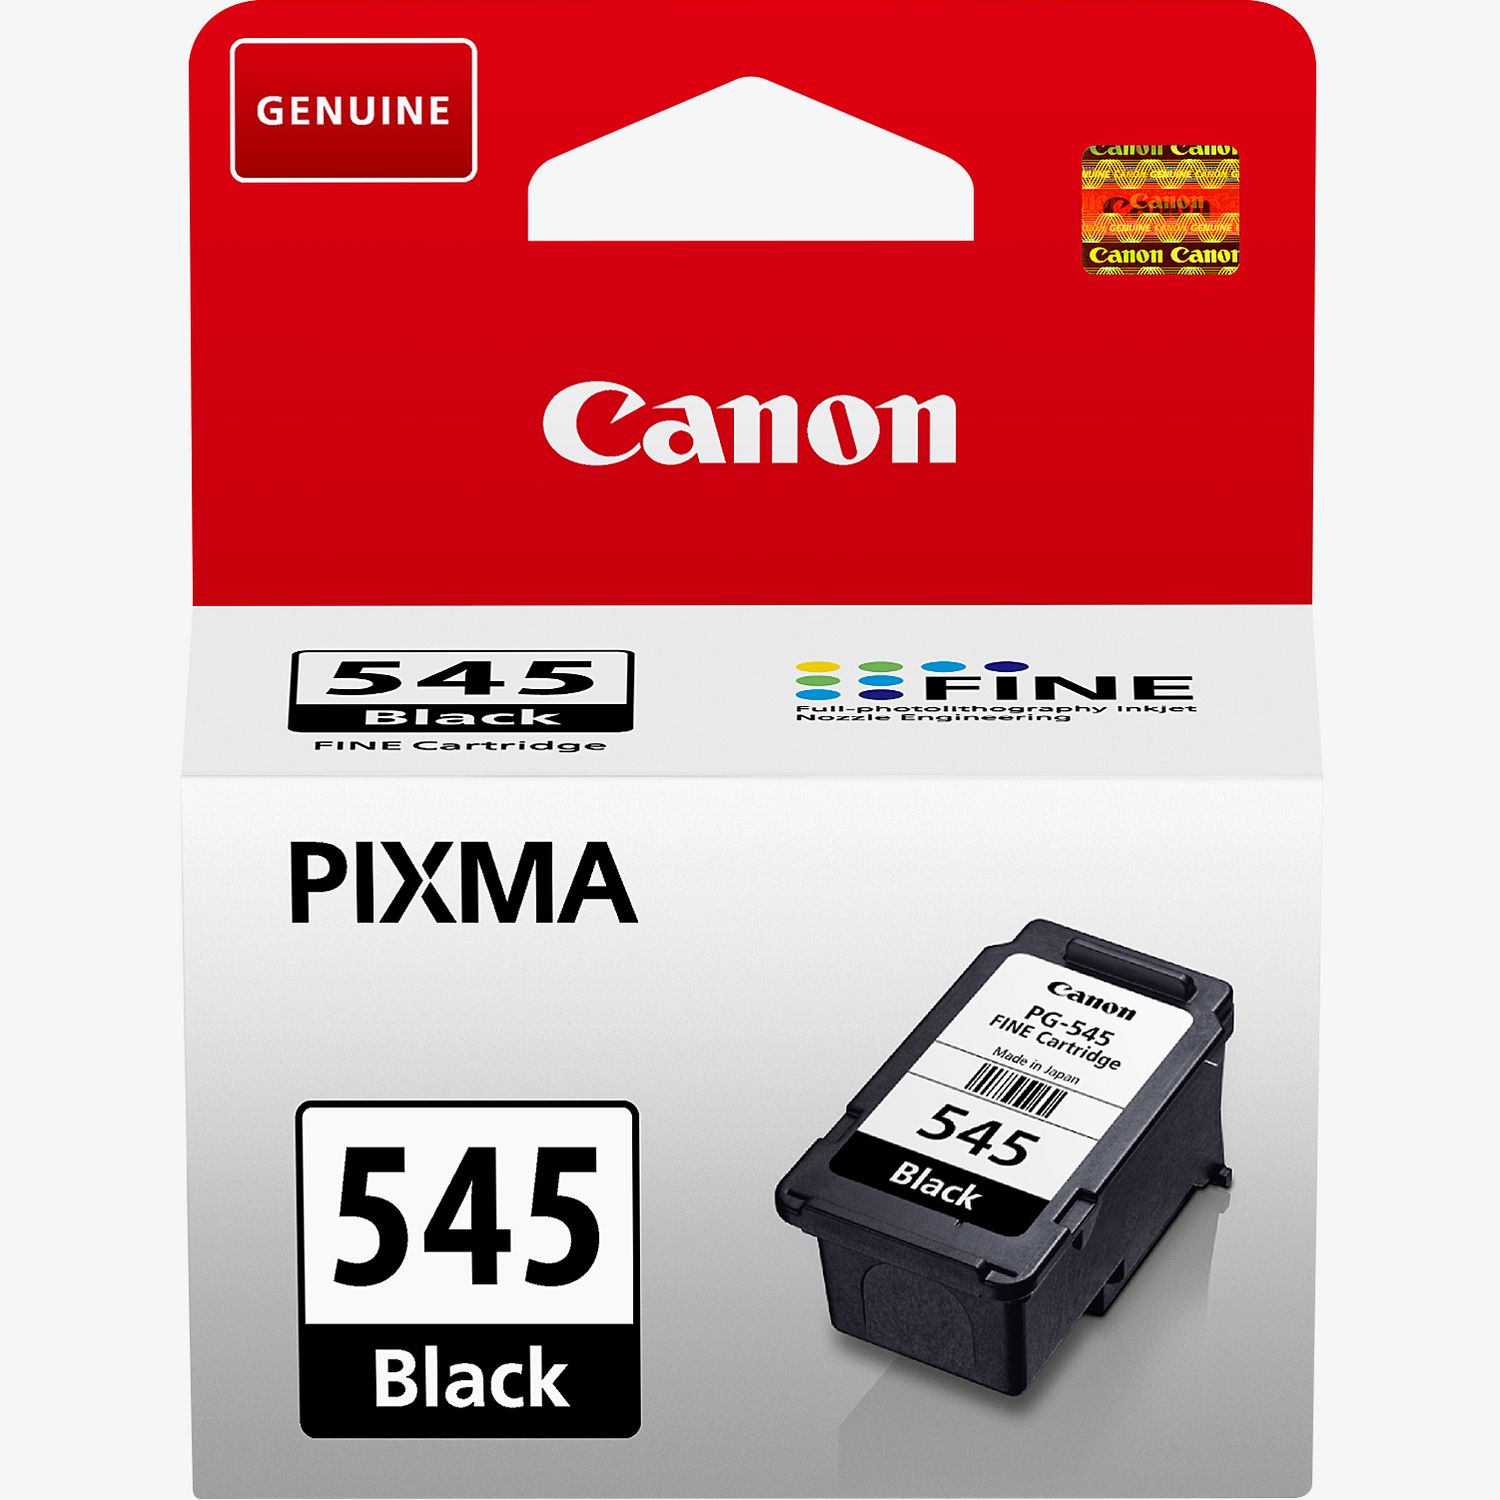 Monochrome Printer Multifunction Canon Pixma TS3350 7,7 ipm WiFi Black